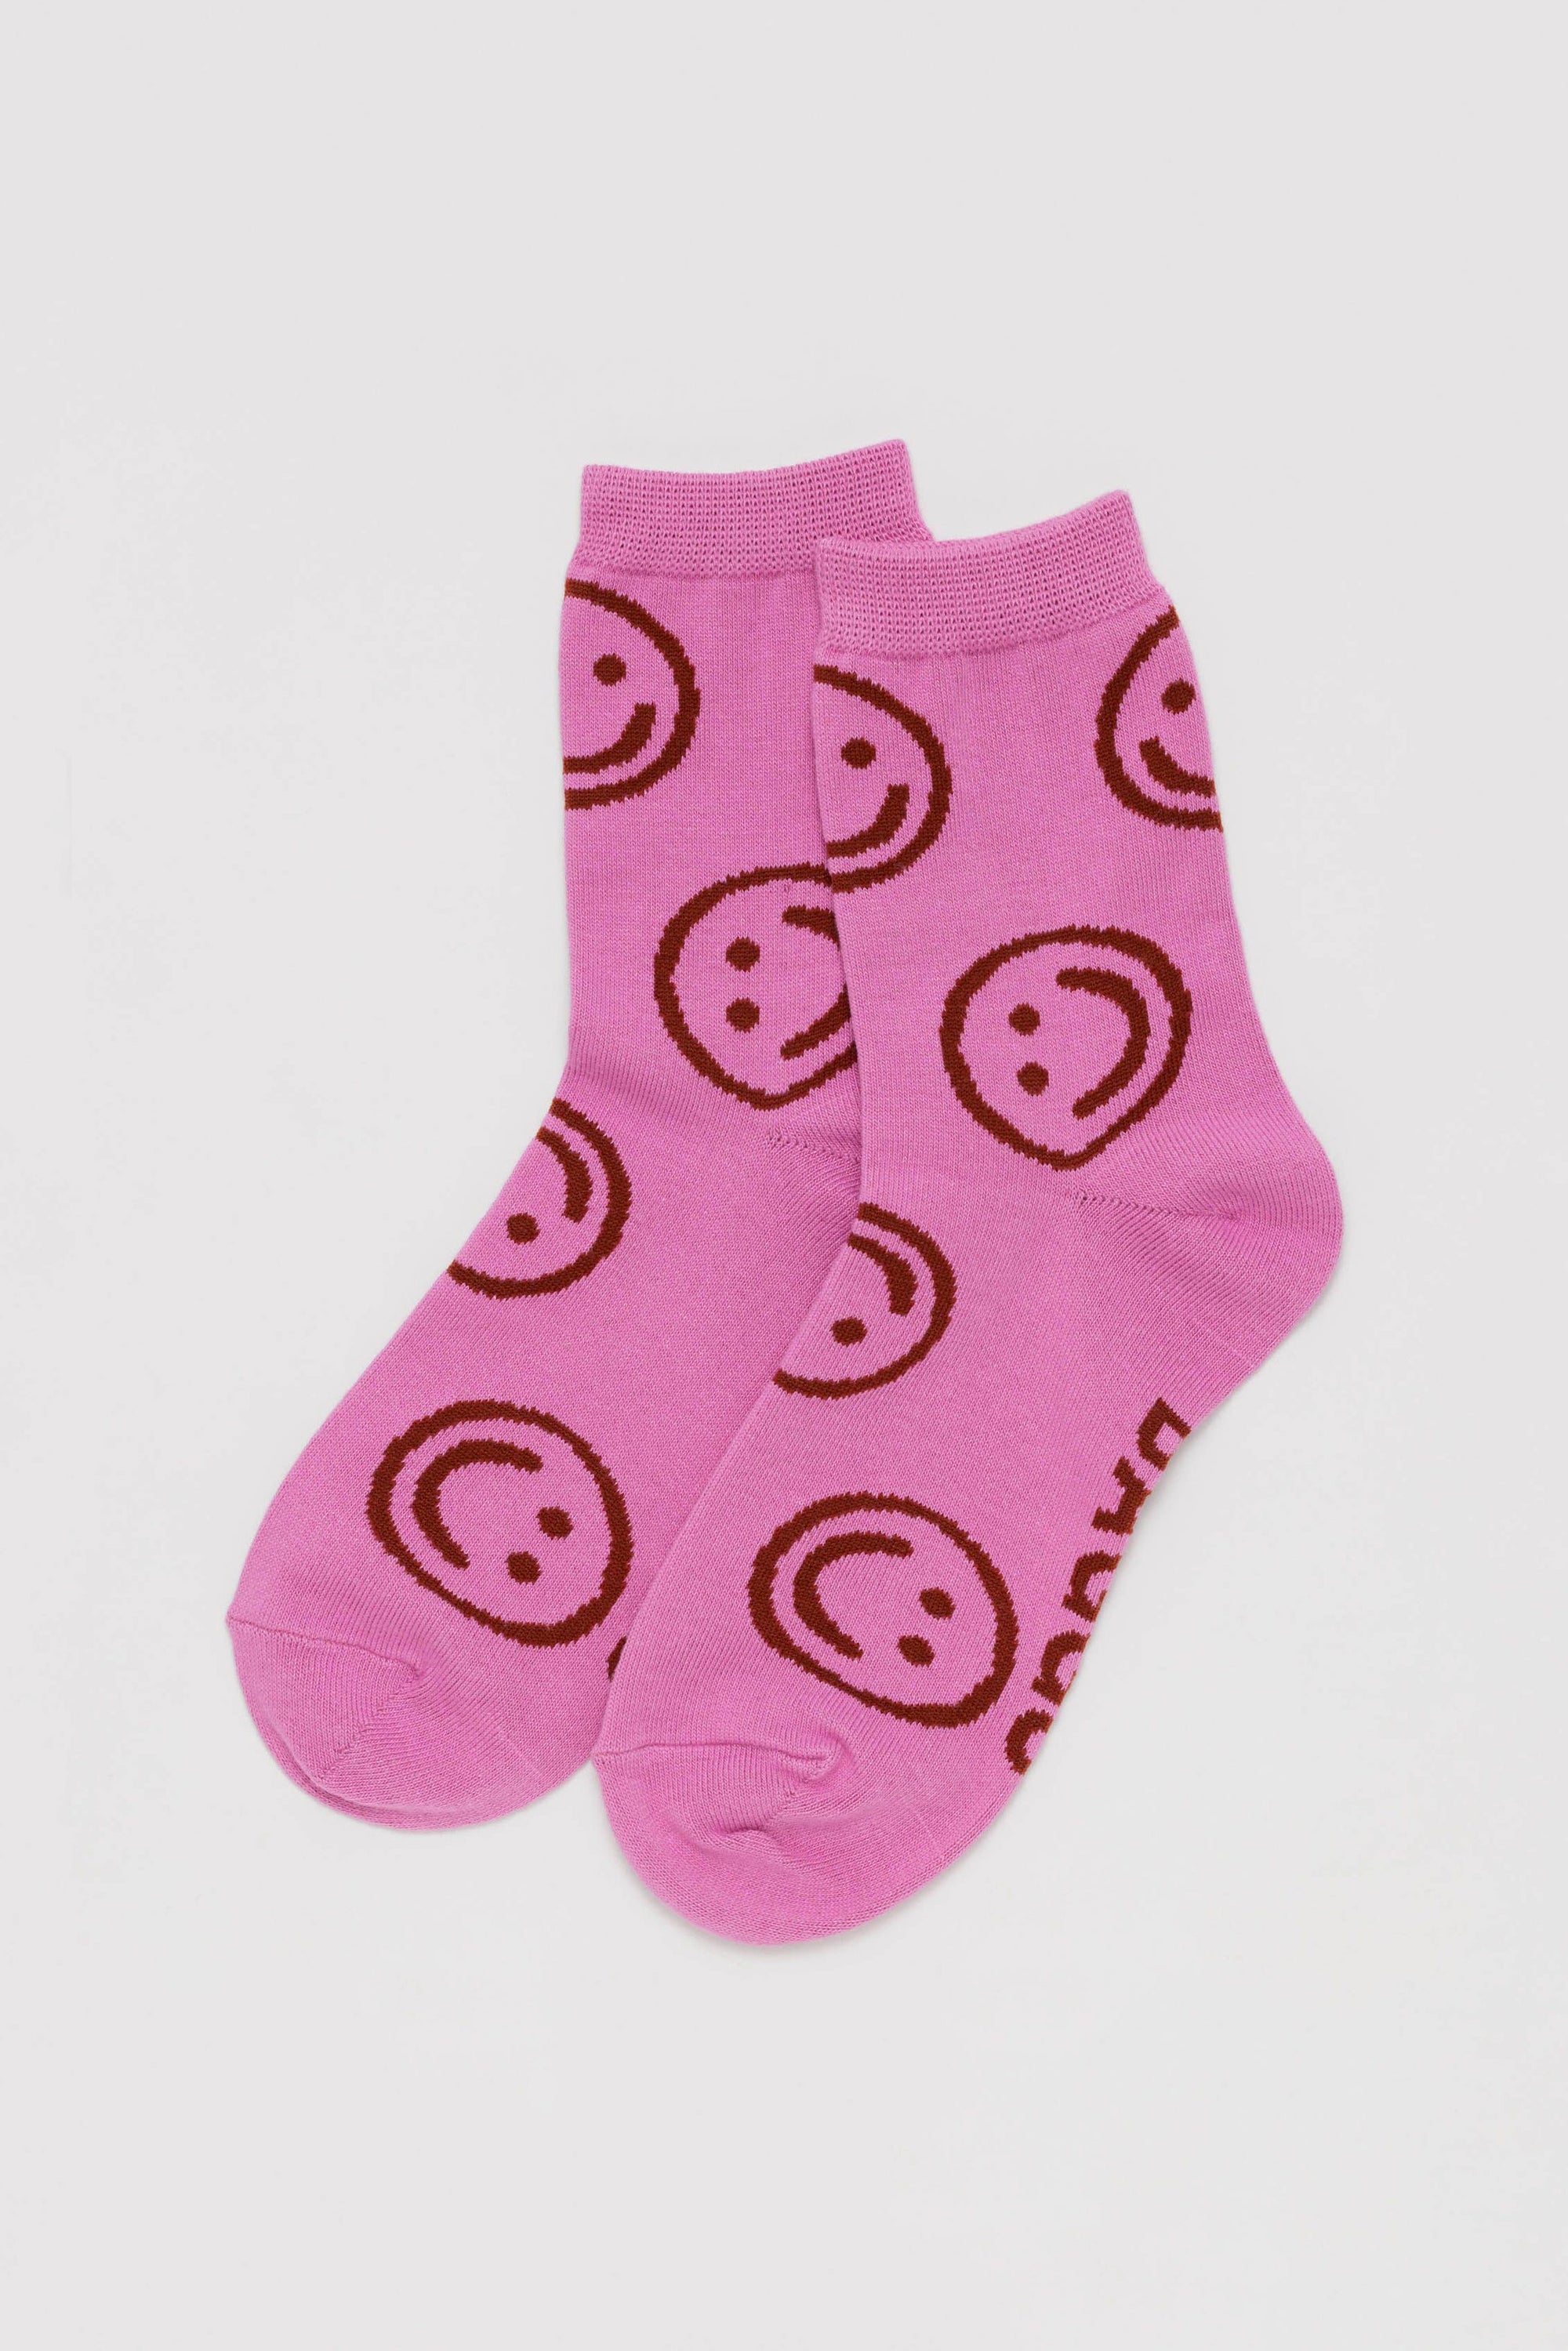 Crew Socks in Extra Pink Happy